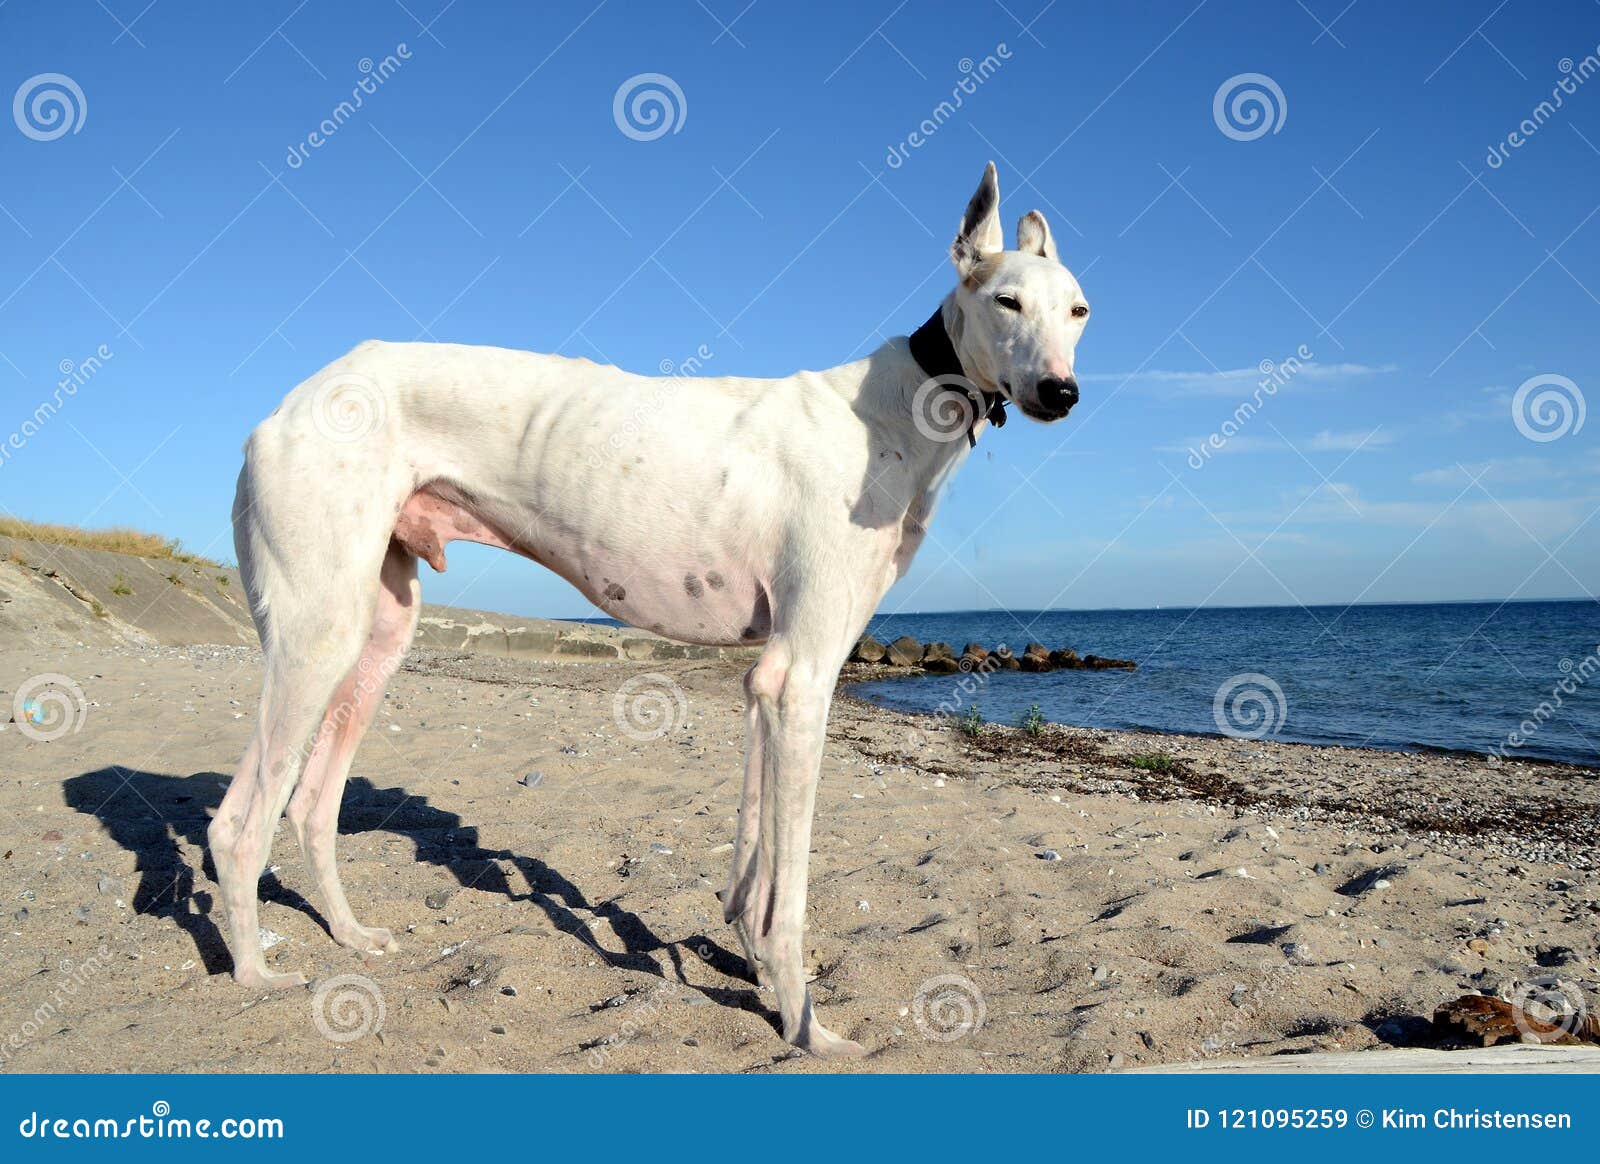 podenco dog at beach